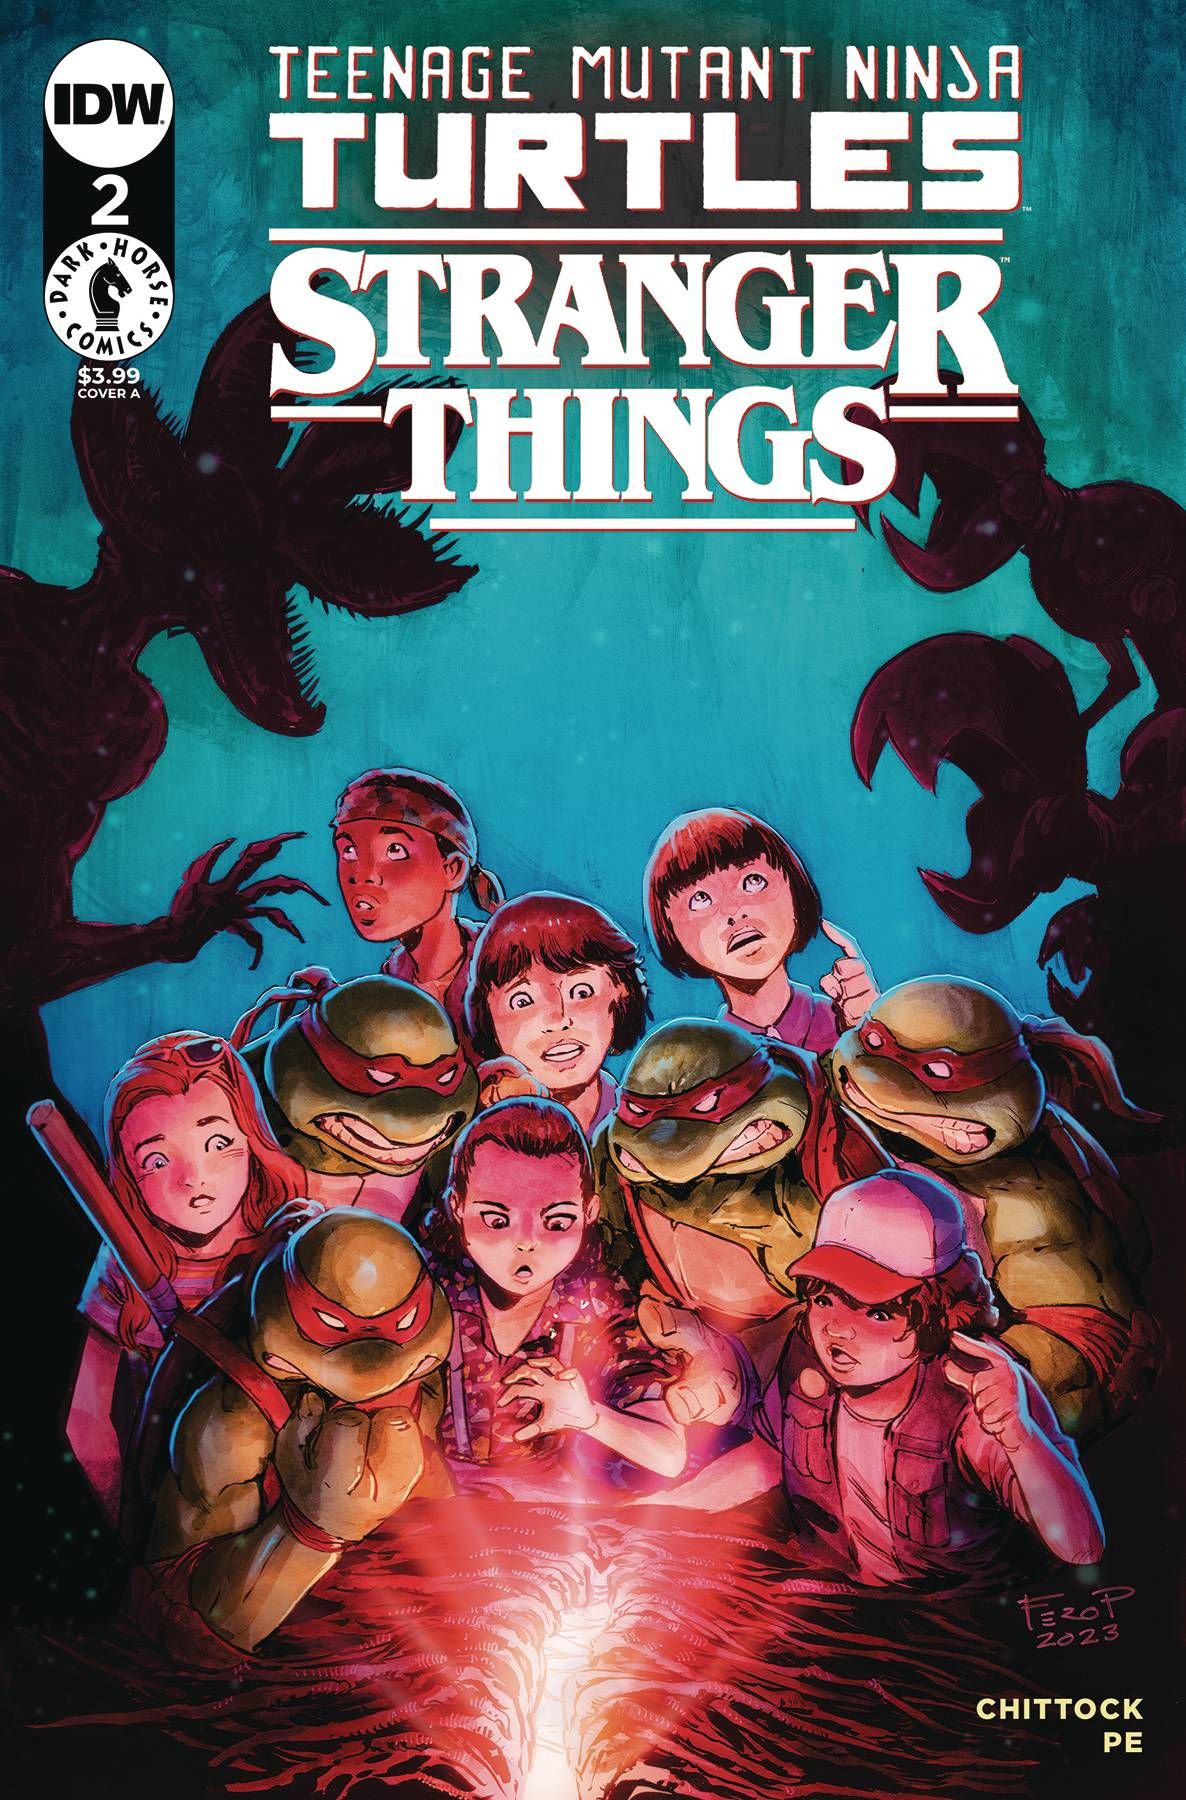 Teenage Mutant Ninja Turtles x Stranger Things #2 Comic